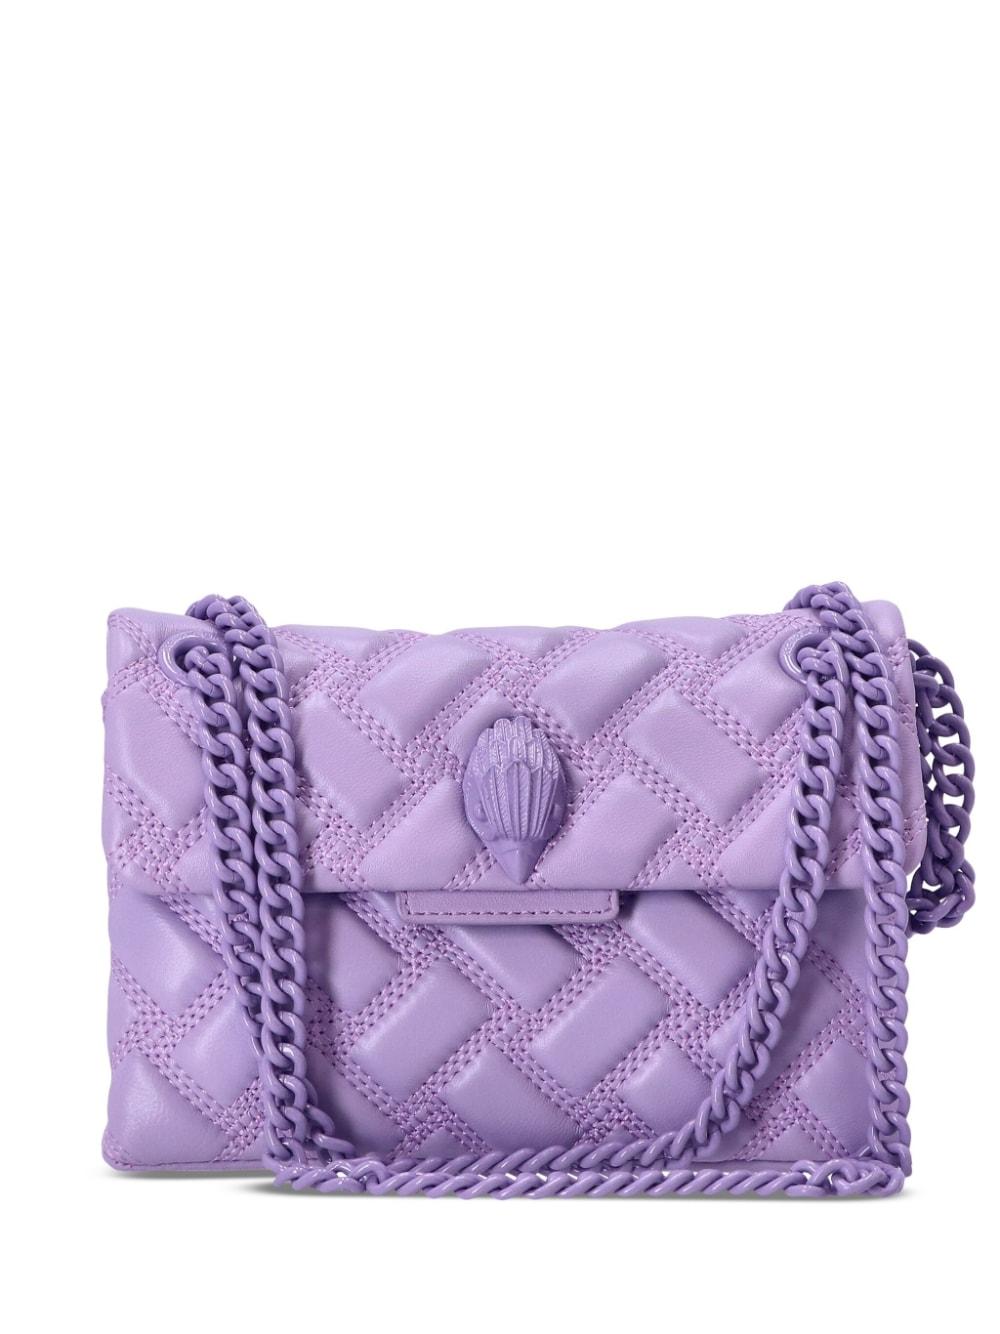 Kurt Geiger Quilted Mini Kensington Bag in Purple | Lyst